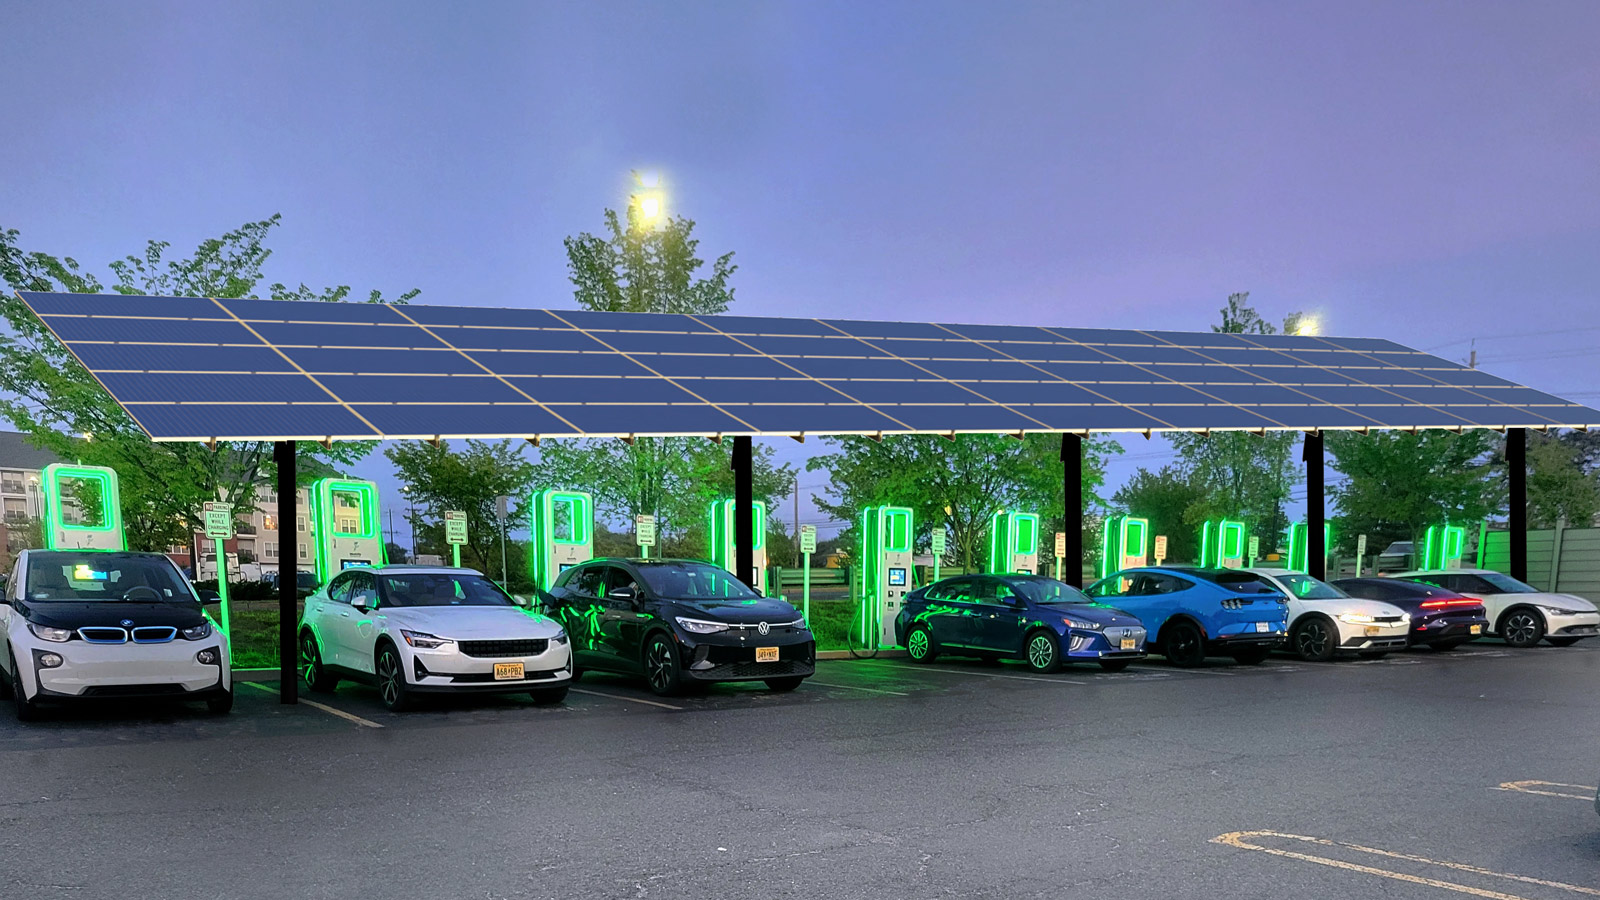 Electric vehicles charging underneath an solar carport